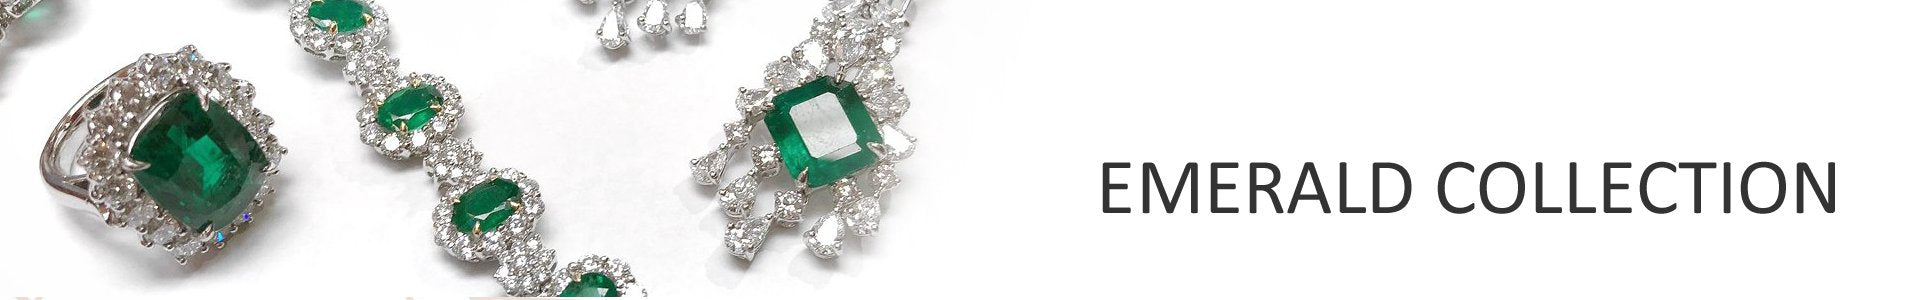 Emerald Collection - Platinum Diamond Jewelry